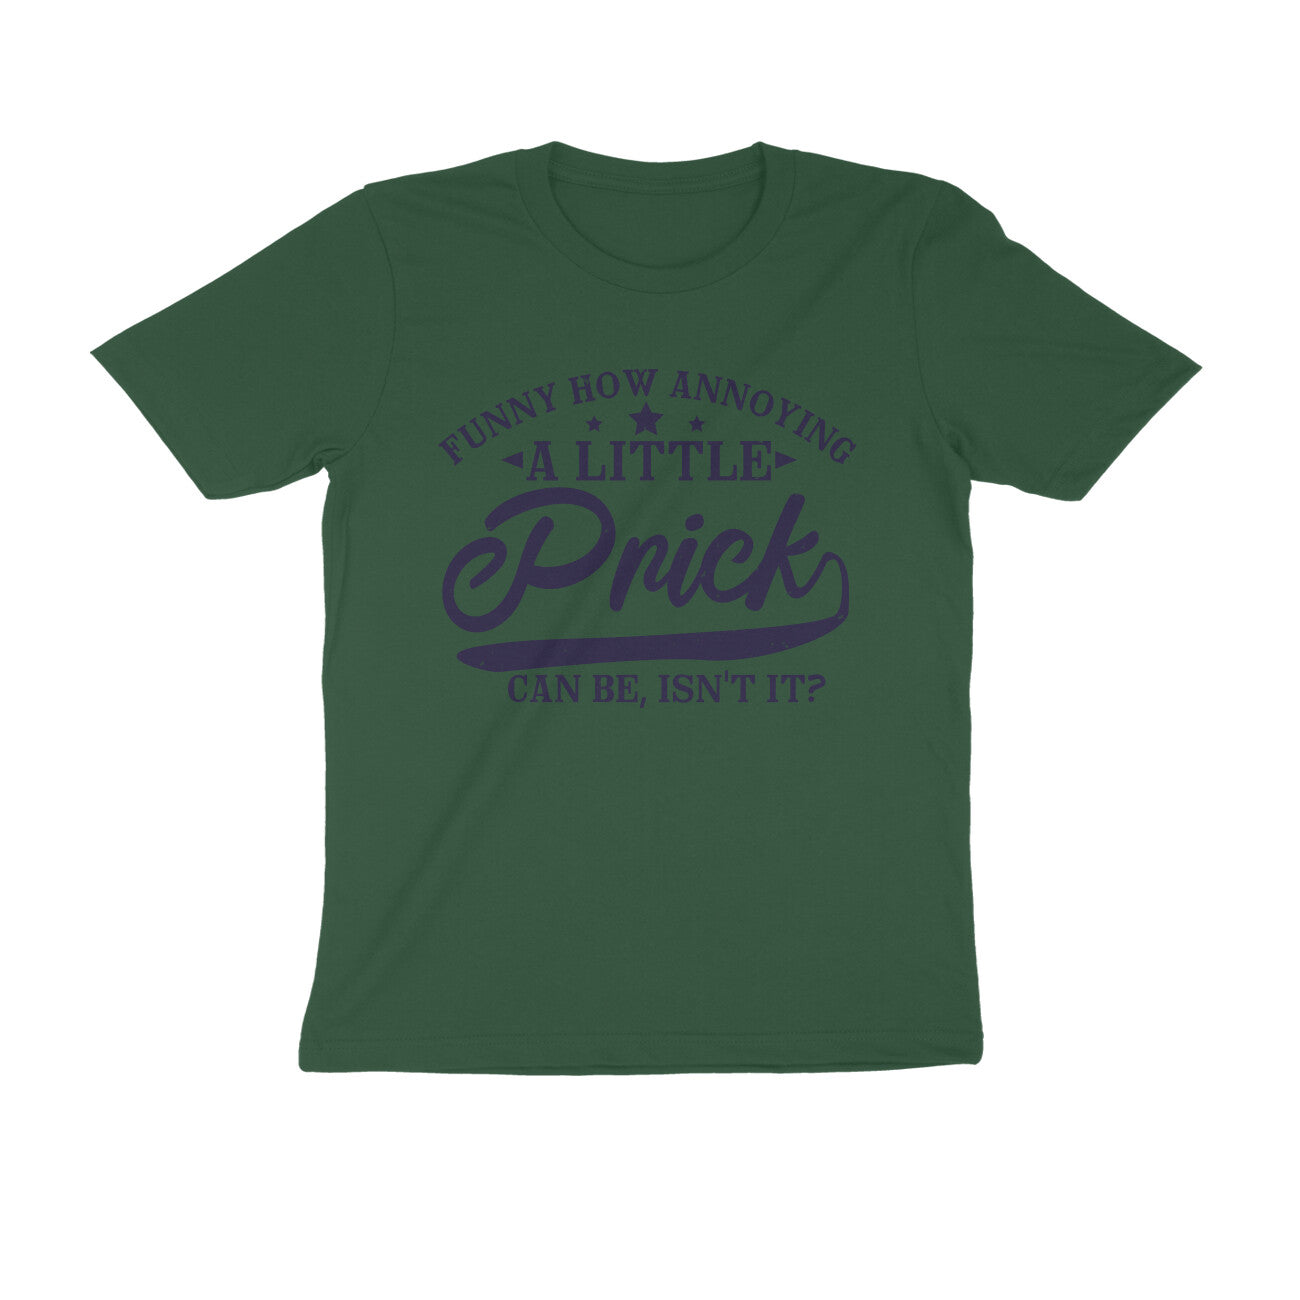 TNH - Men's Round Neck T-Shirt - A Little Prick